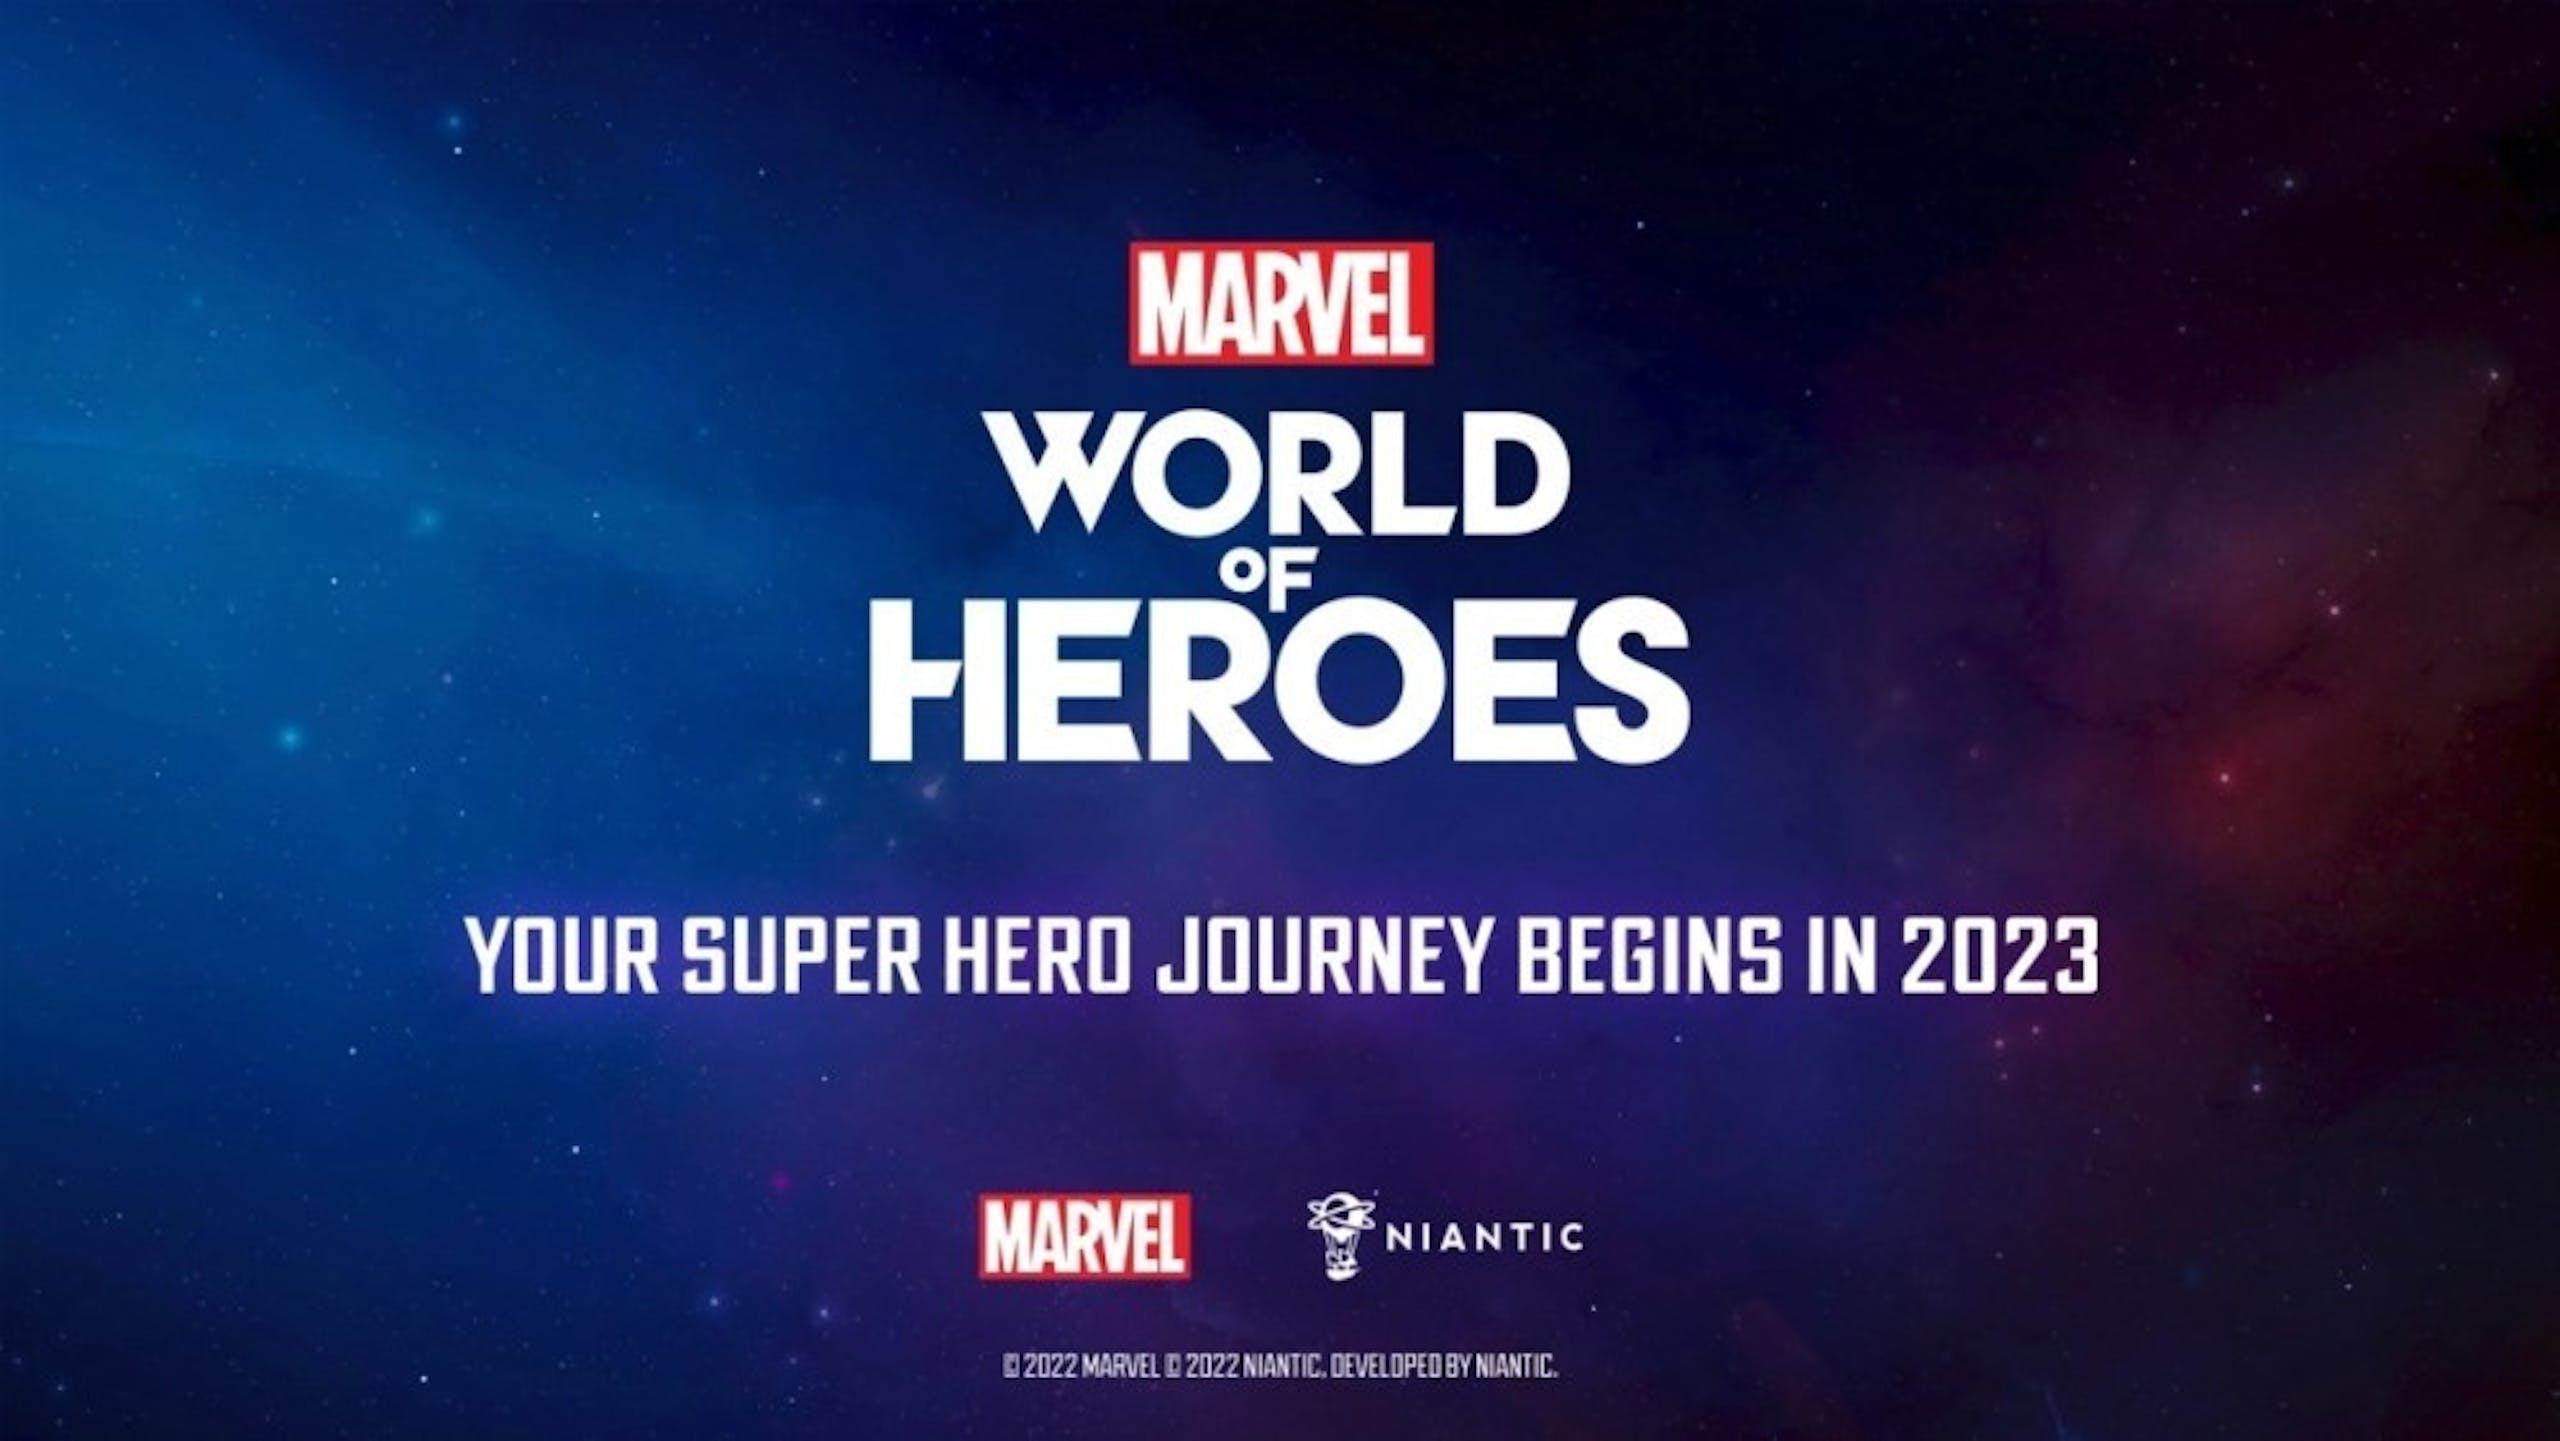 Niantic 2023年將推出漫威《Marvel World of Heroes》AR 遊戲 玩家可扮演自訂英雄 與蜘蛛人、美國隊長、金剛狼組隊